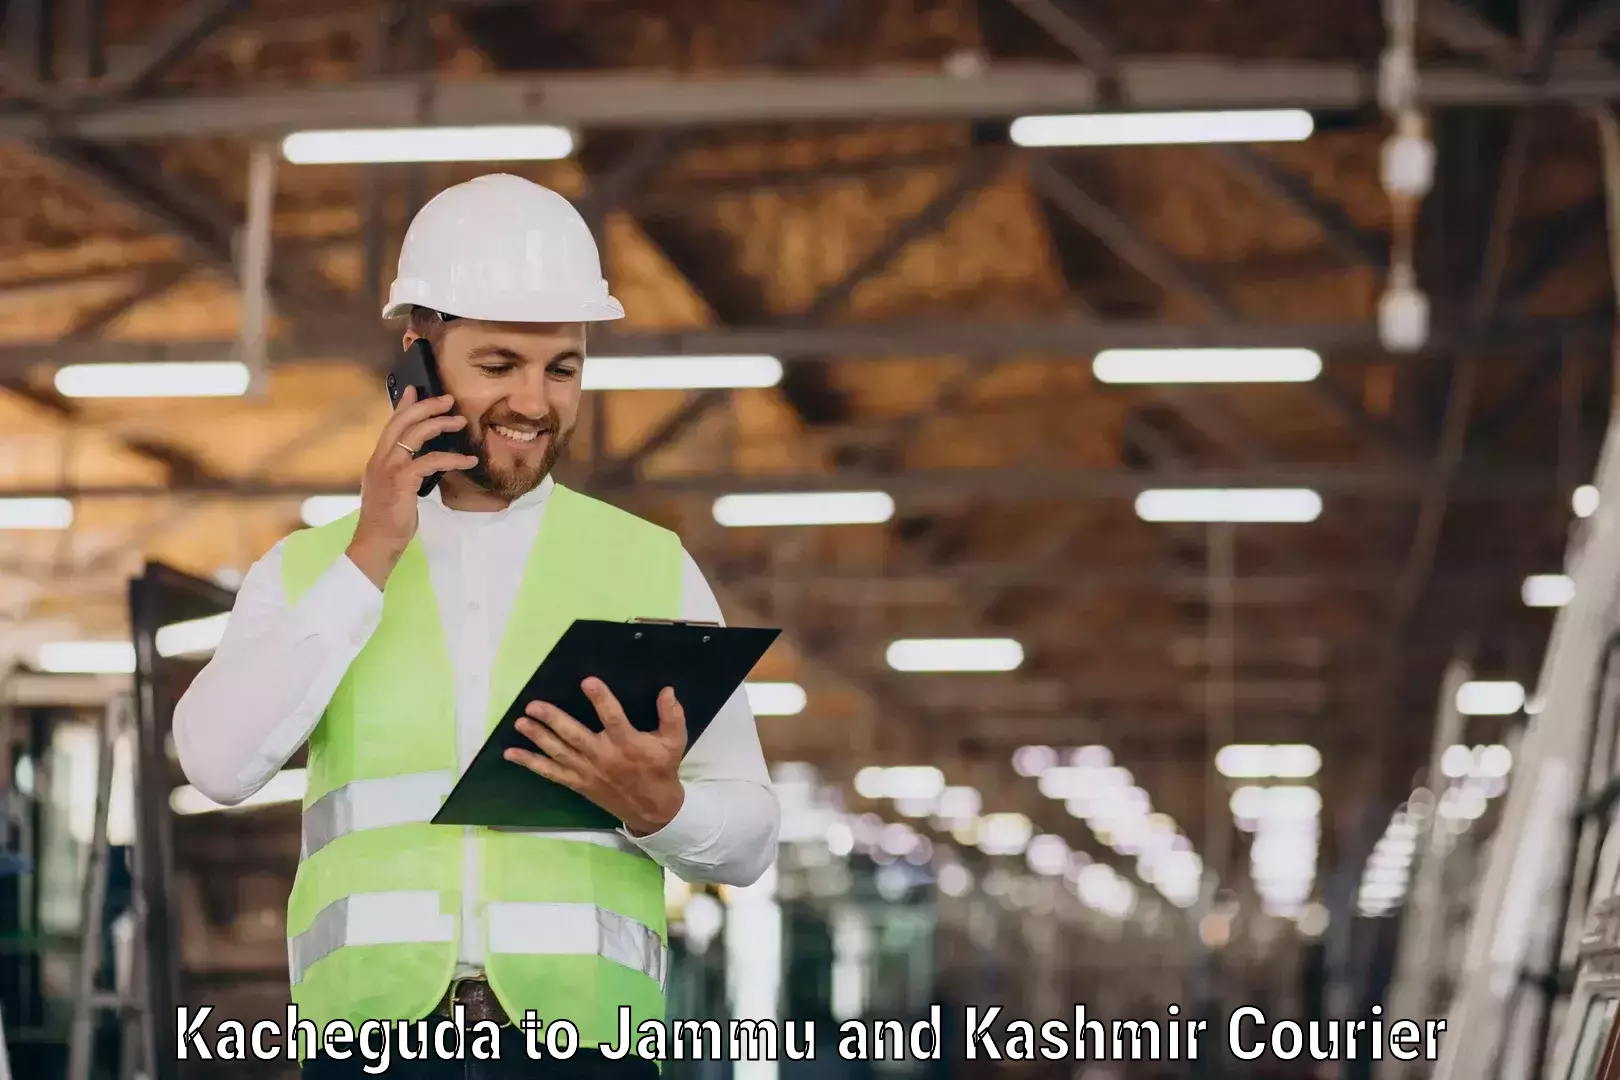 Global logistics network Kacheguda to Ranbir Singh Pura